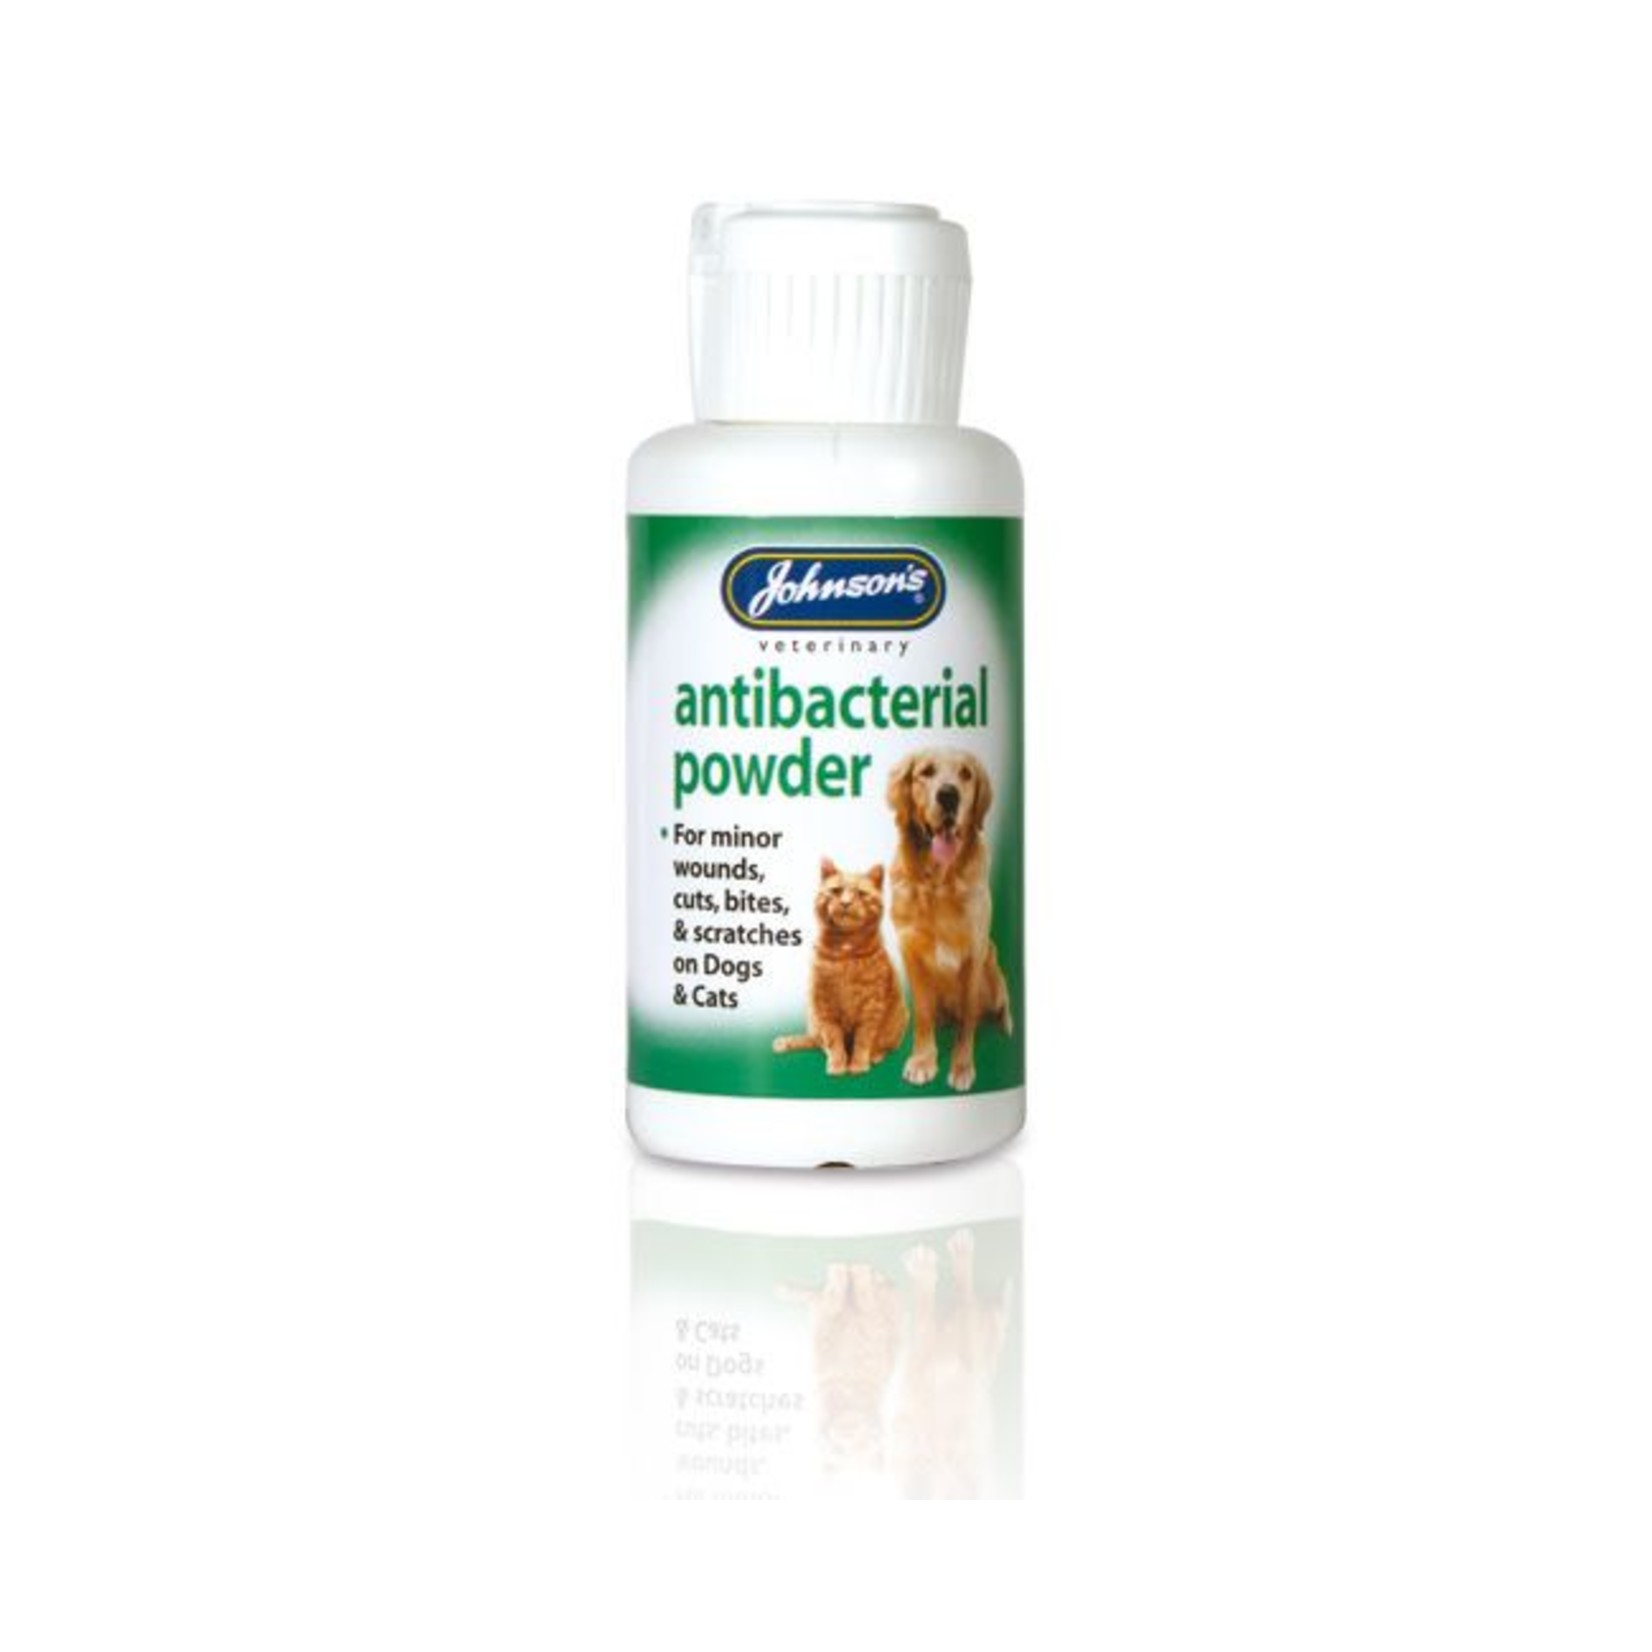 Johnson's Veterinary Antibacterial Powder for minor wounds, 20g